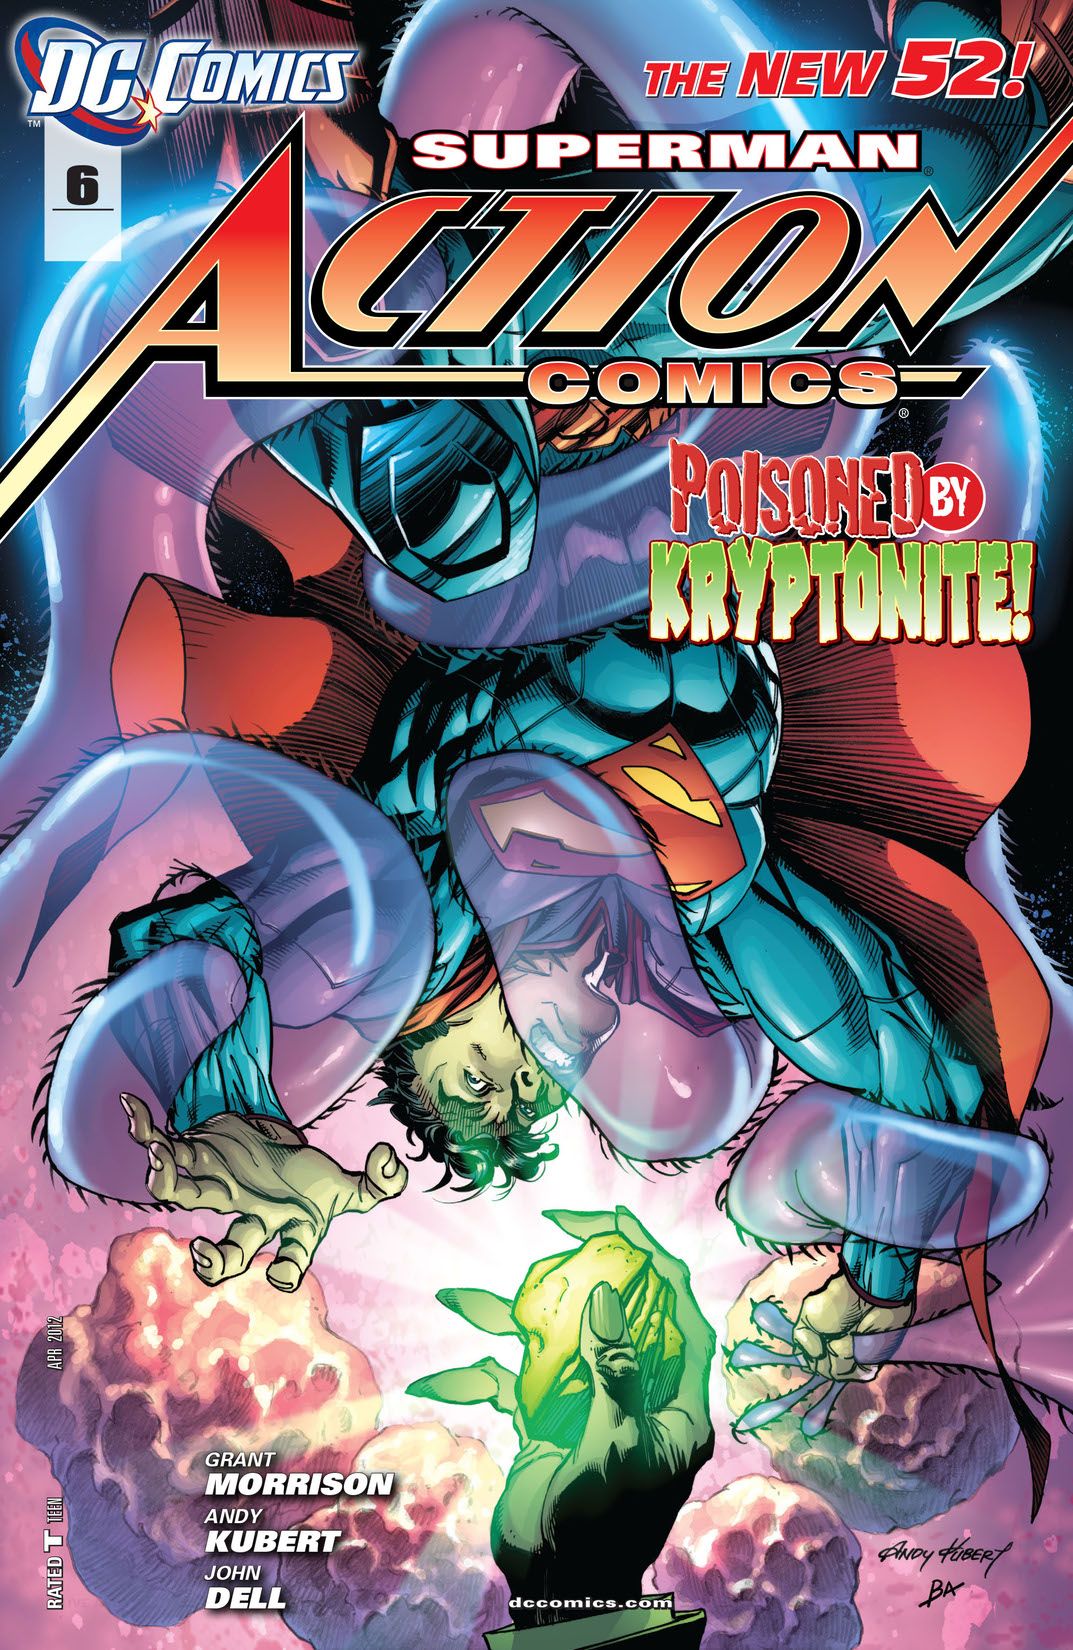 Action Comics (2011-) #6 preview images